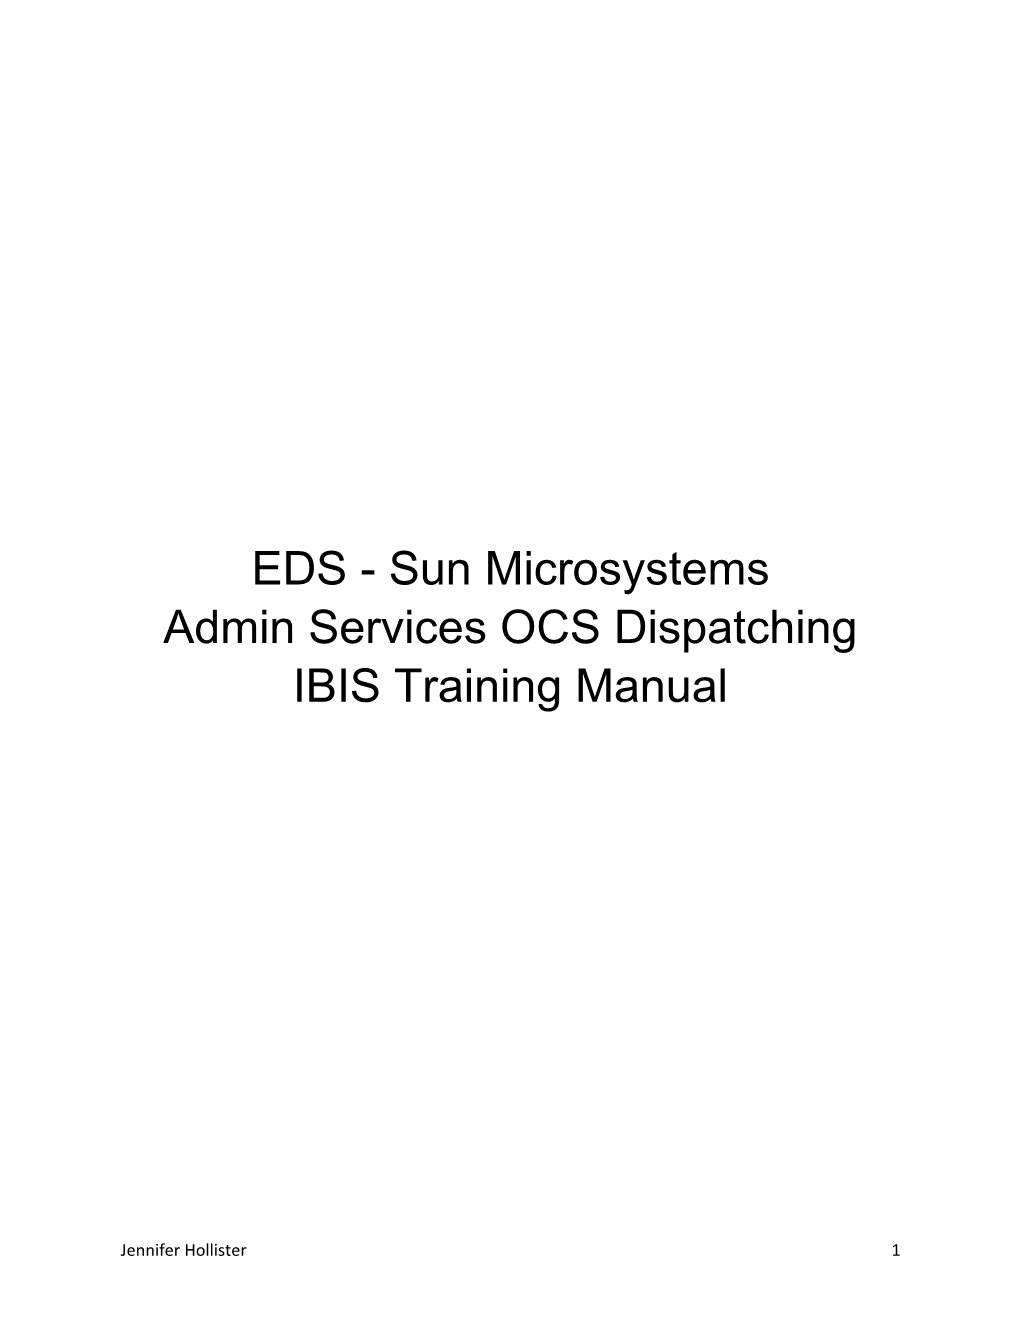 Admin Services OCS Dispatching